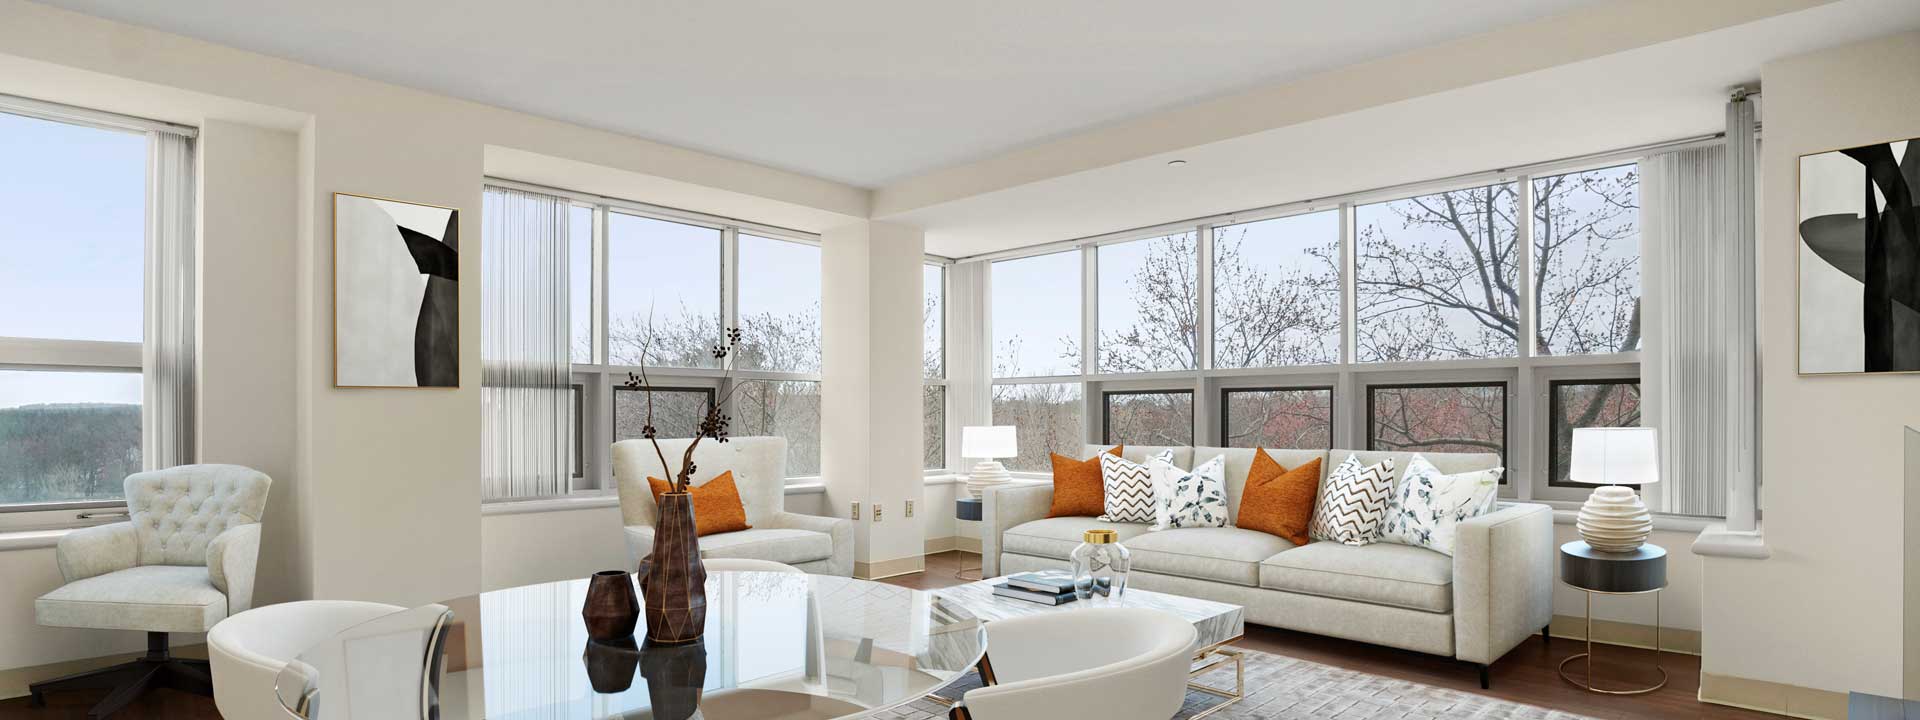 Modern design, oversized windows, luxury living.